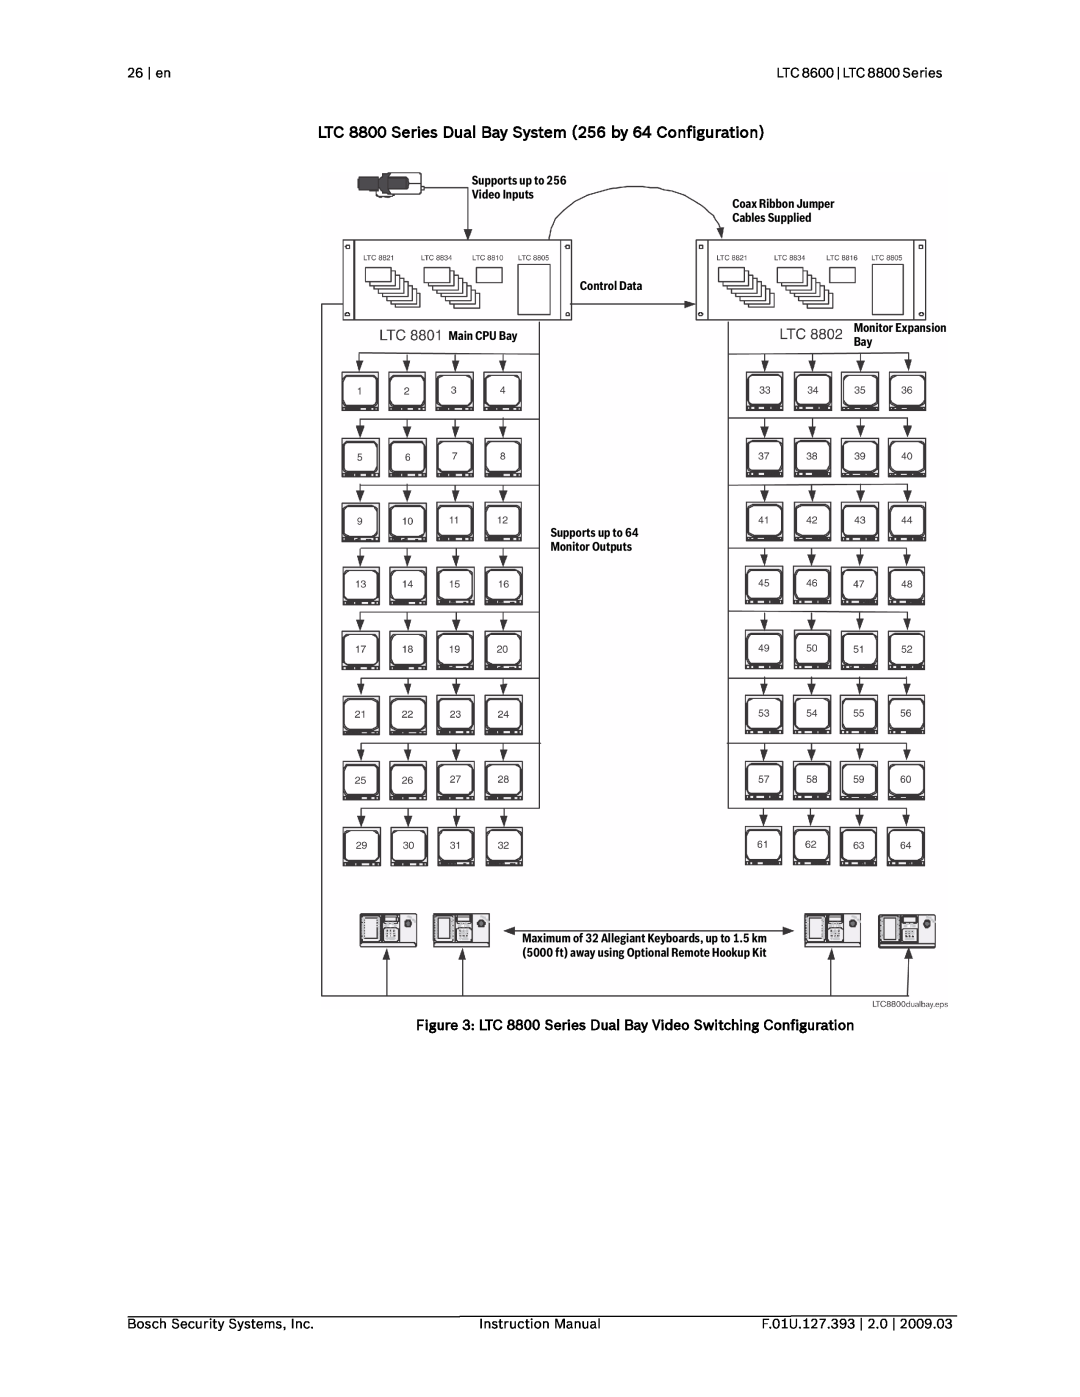 Bosch Appliances LTC 8600 26 | en, Bosch Security Systems, Inc, Instruction Manual, F.01U.127.393 | 2.0, Monitor Expansion 